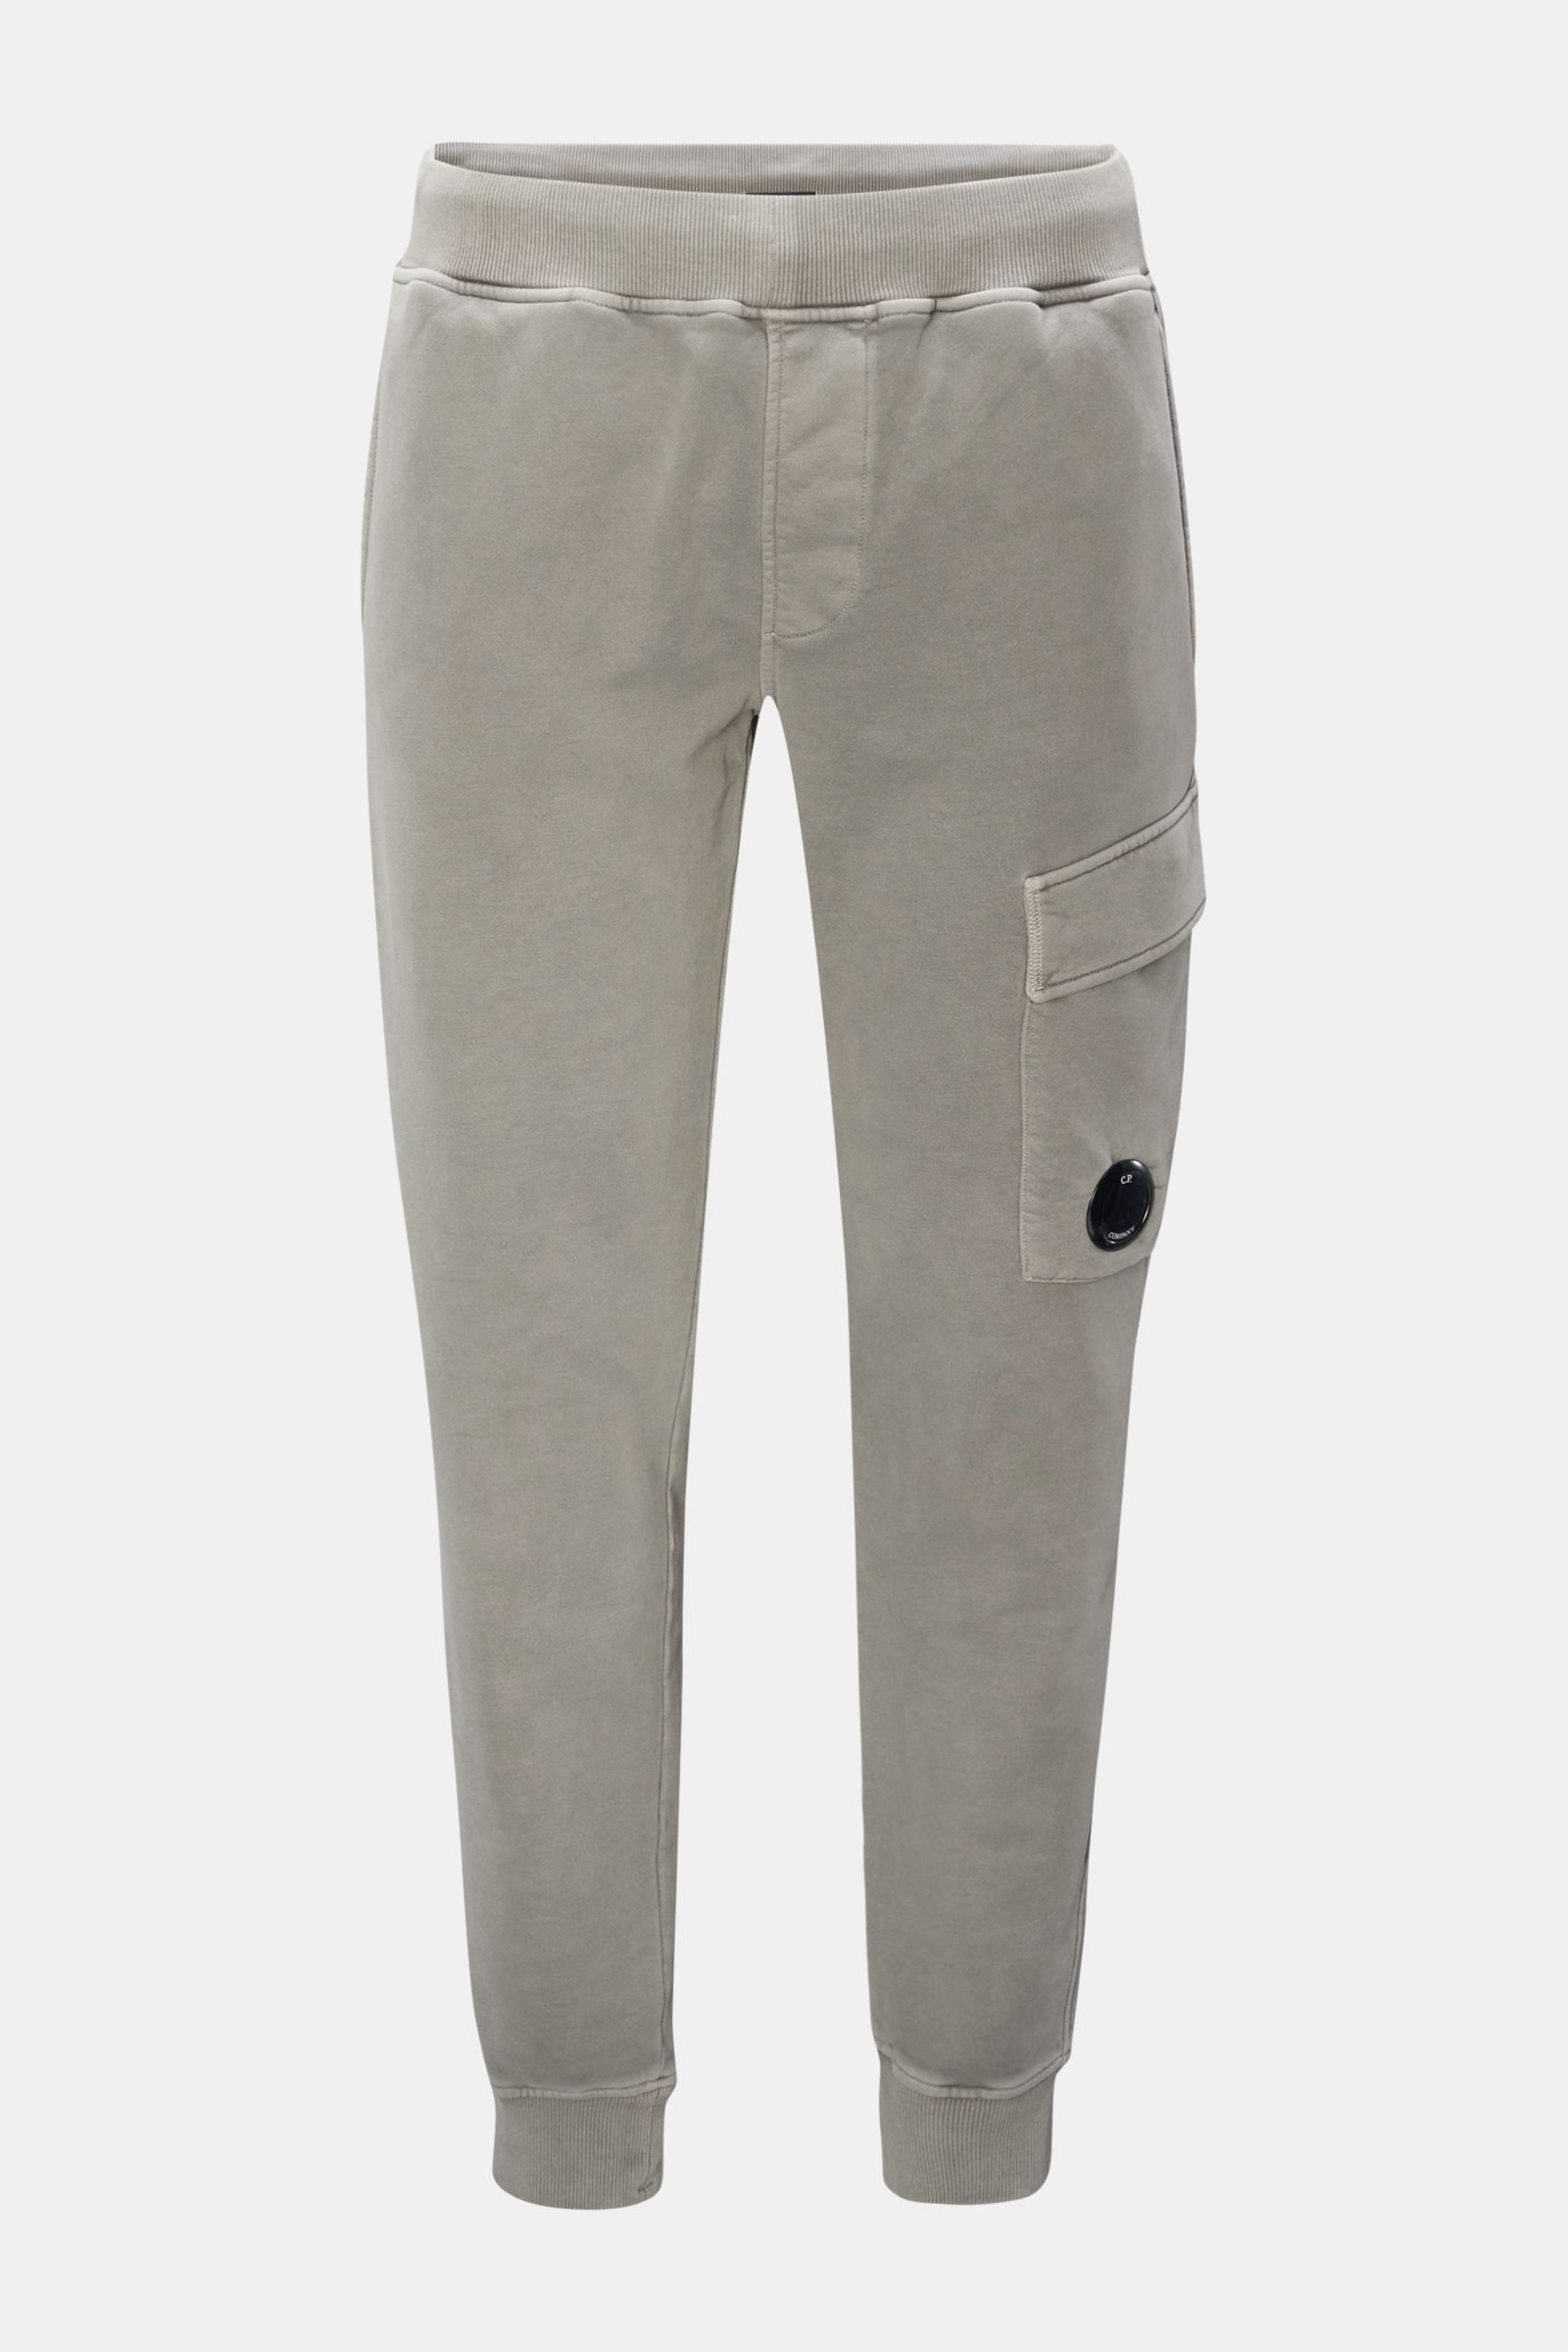 Cargo sweat pants grey